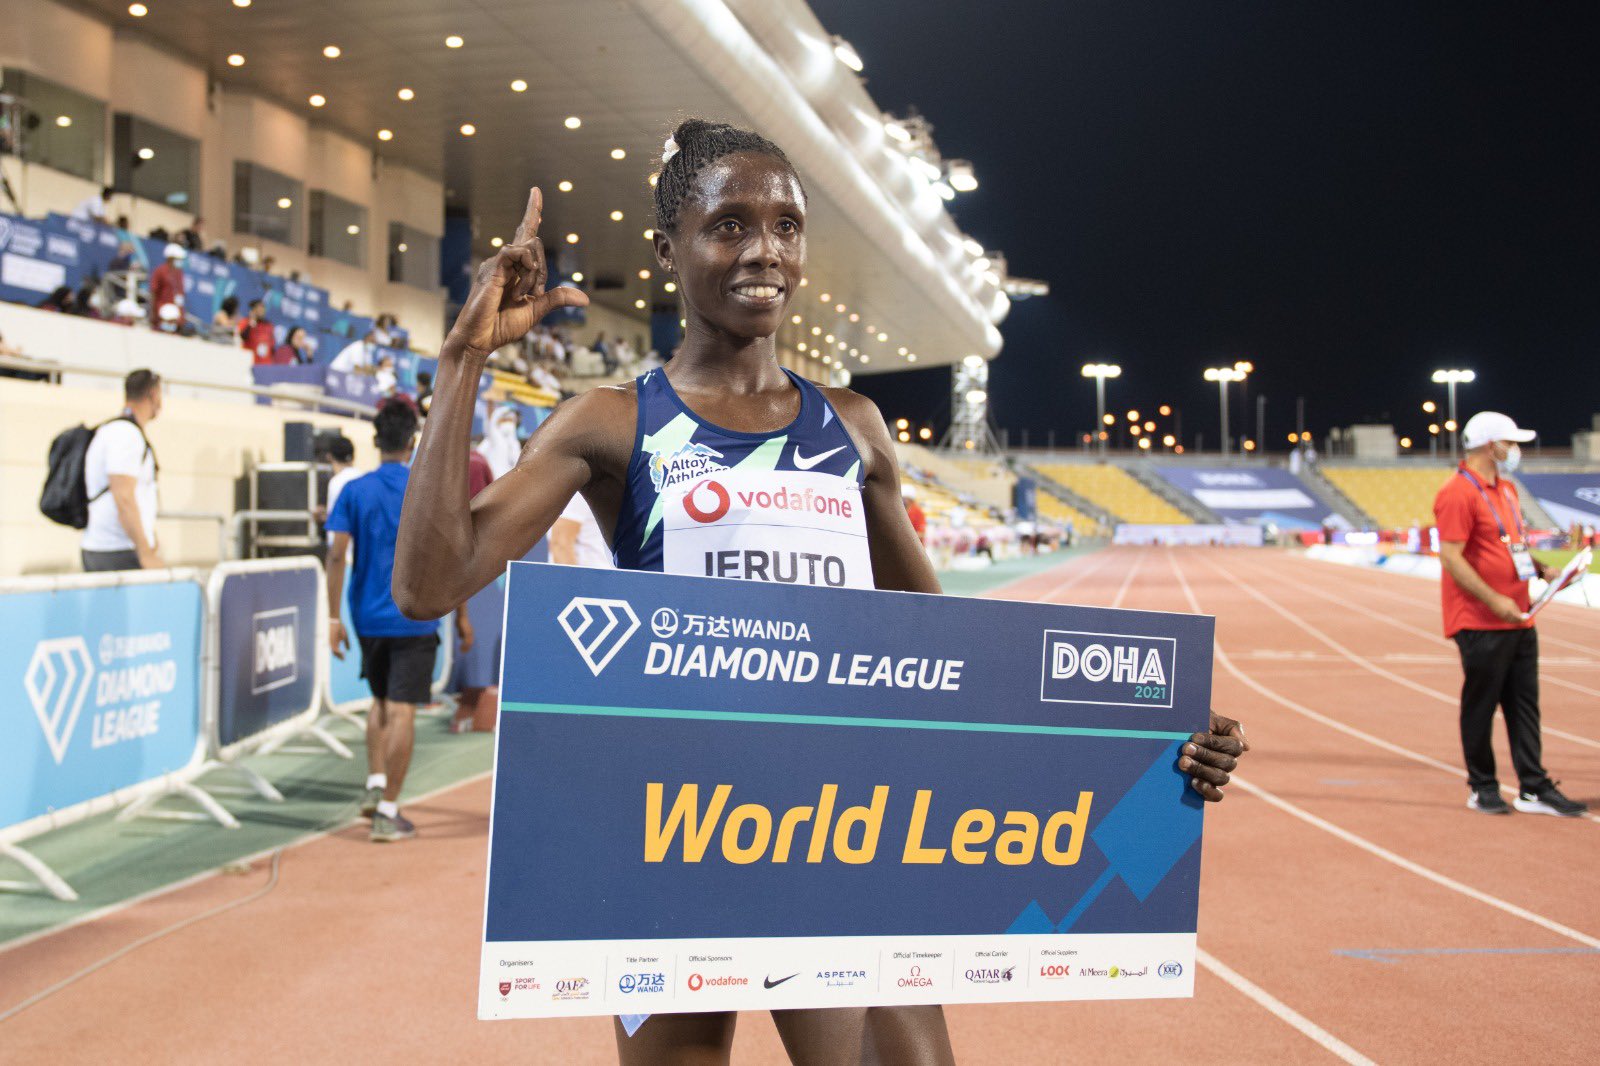 Doha Diamond League On Twitter Norah Jeruto Of Kenya Wins Vodafone Race 3000m Steeplechase Women Setting A World Leading Record 9 00 67 At Wanda Diamond League Doha Tour 2021 Https T Co Yavp8lnqdu